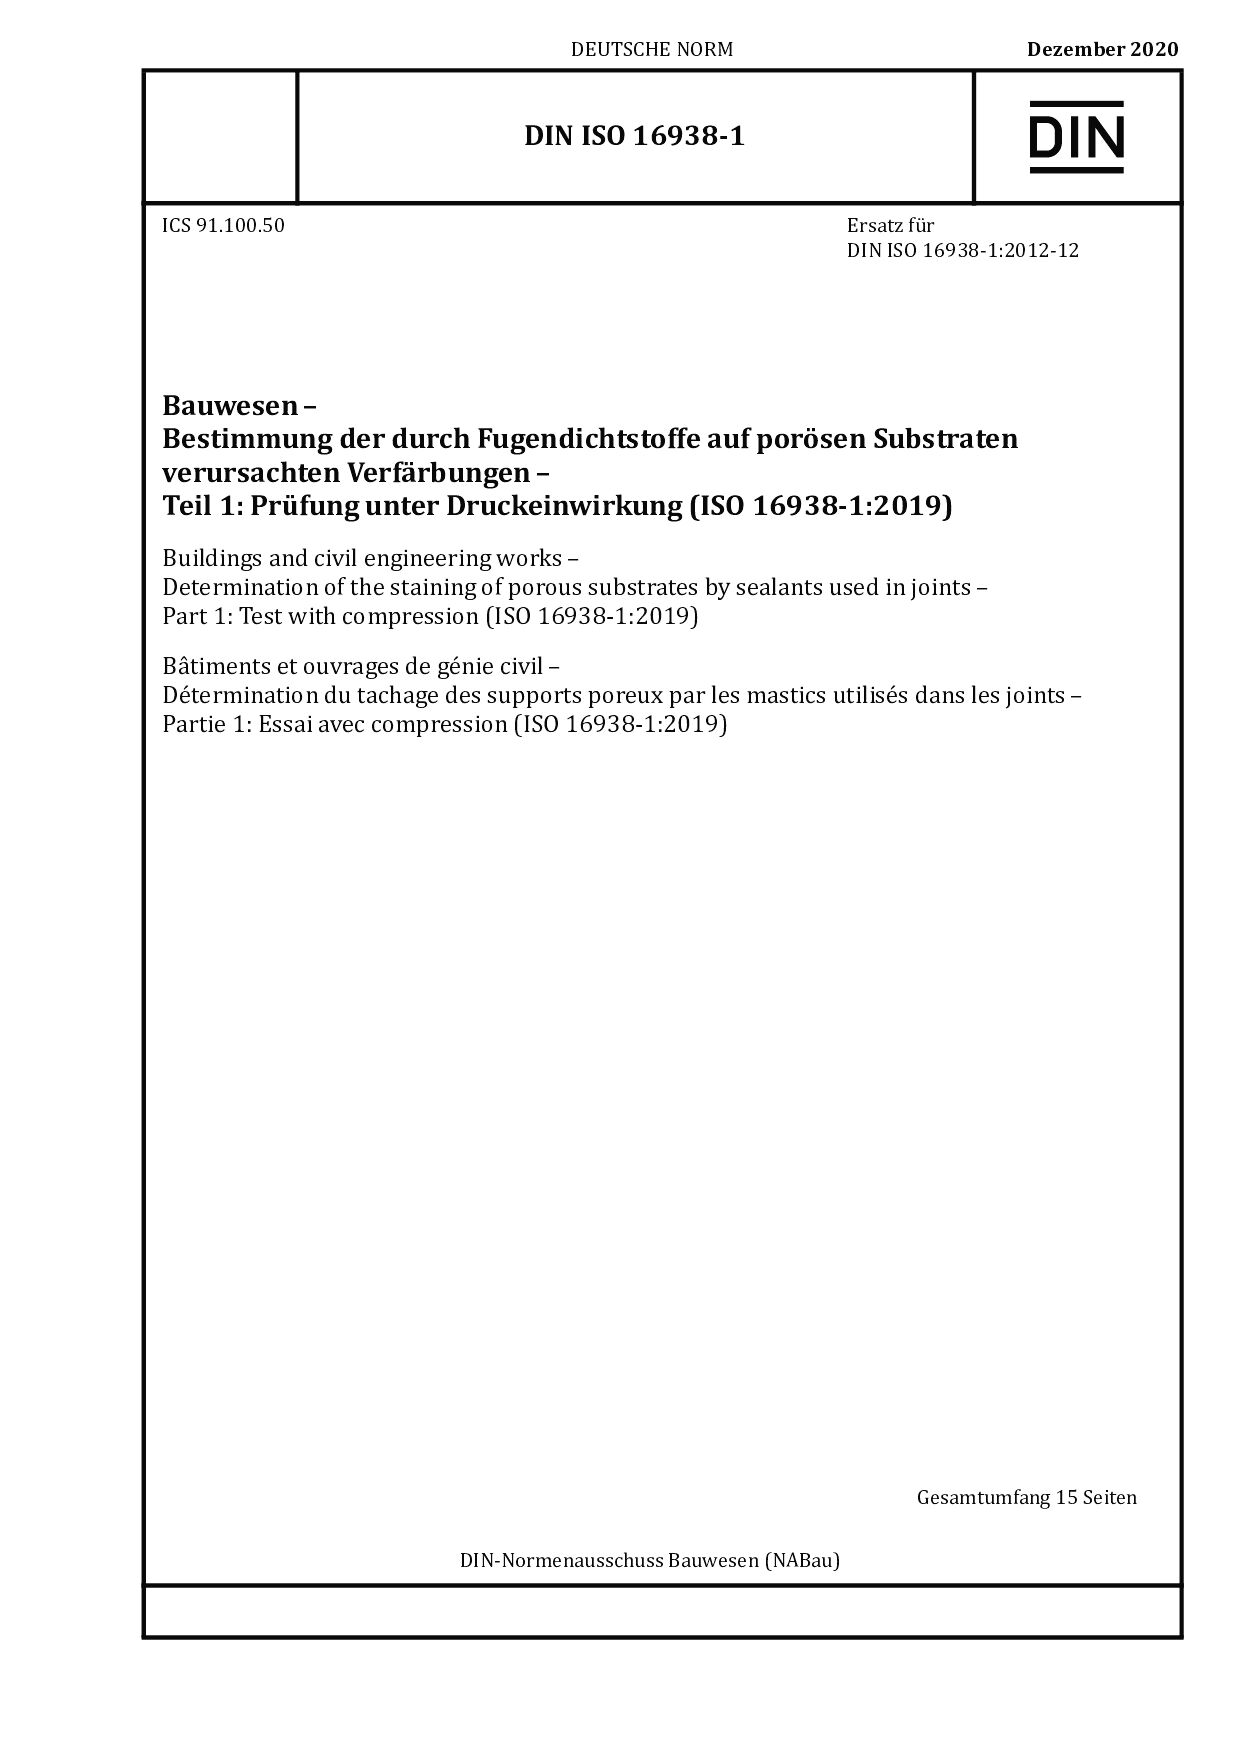 DIN ISO 16938-1:2020